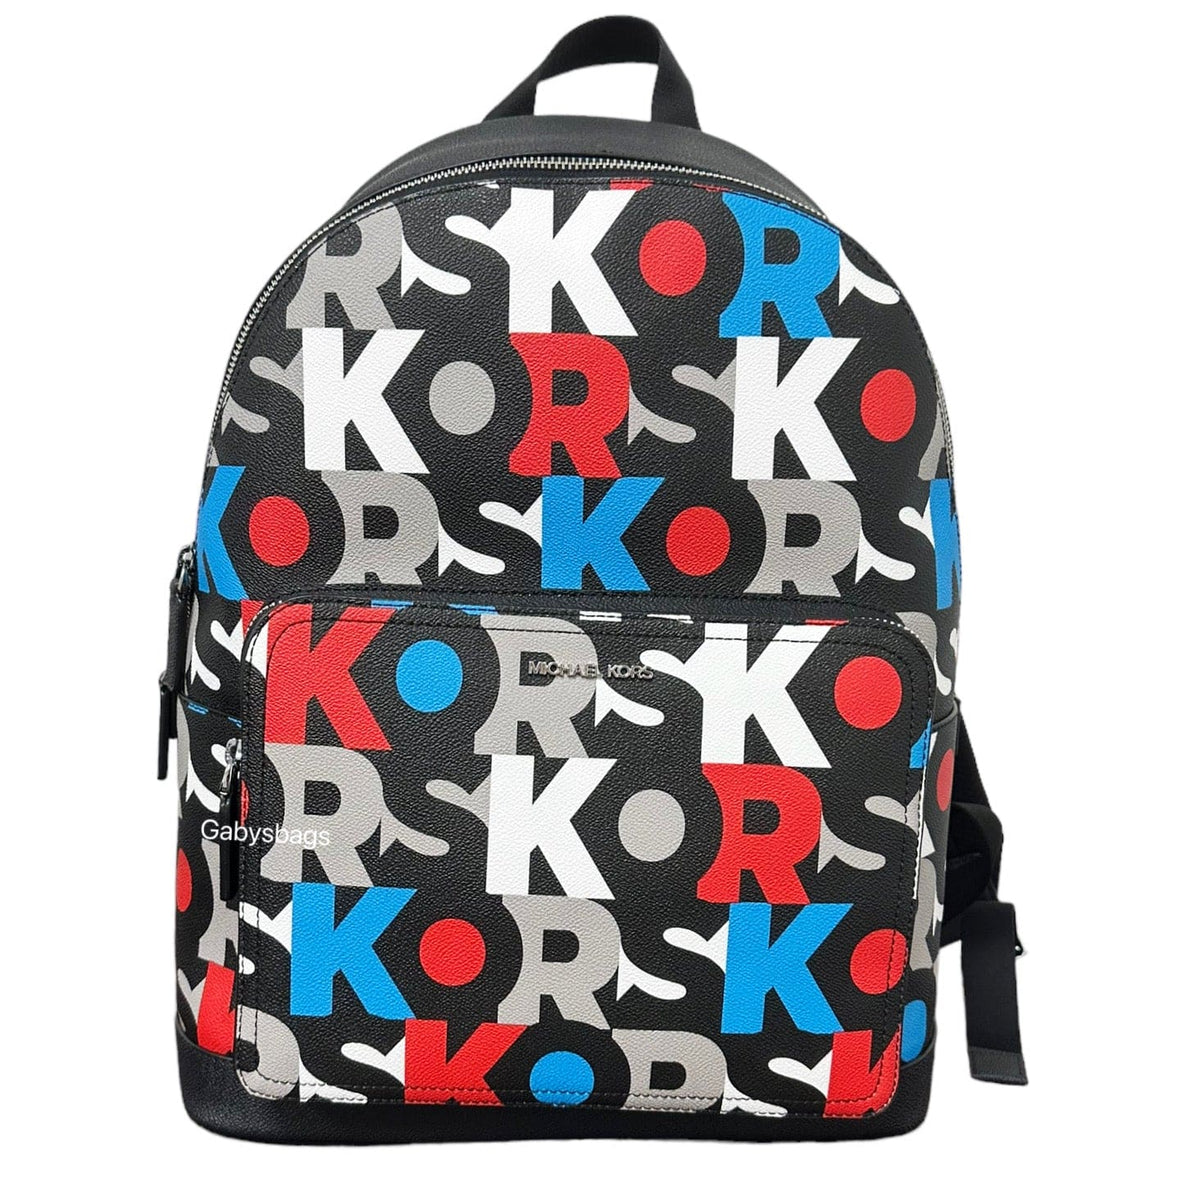 MICHAEL KORS Mens Cooper Logo Backpack